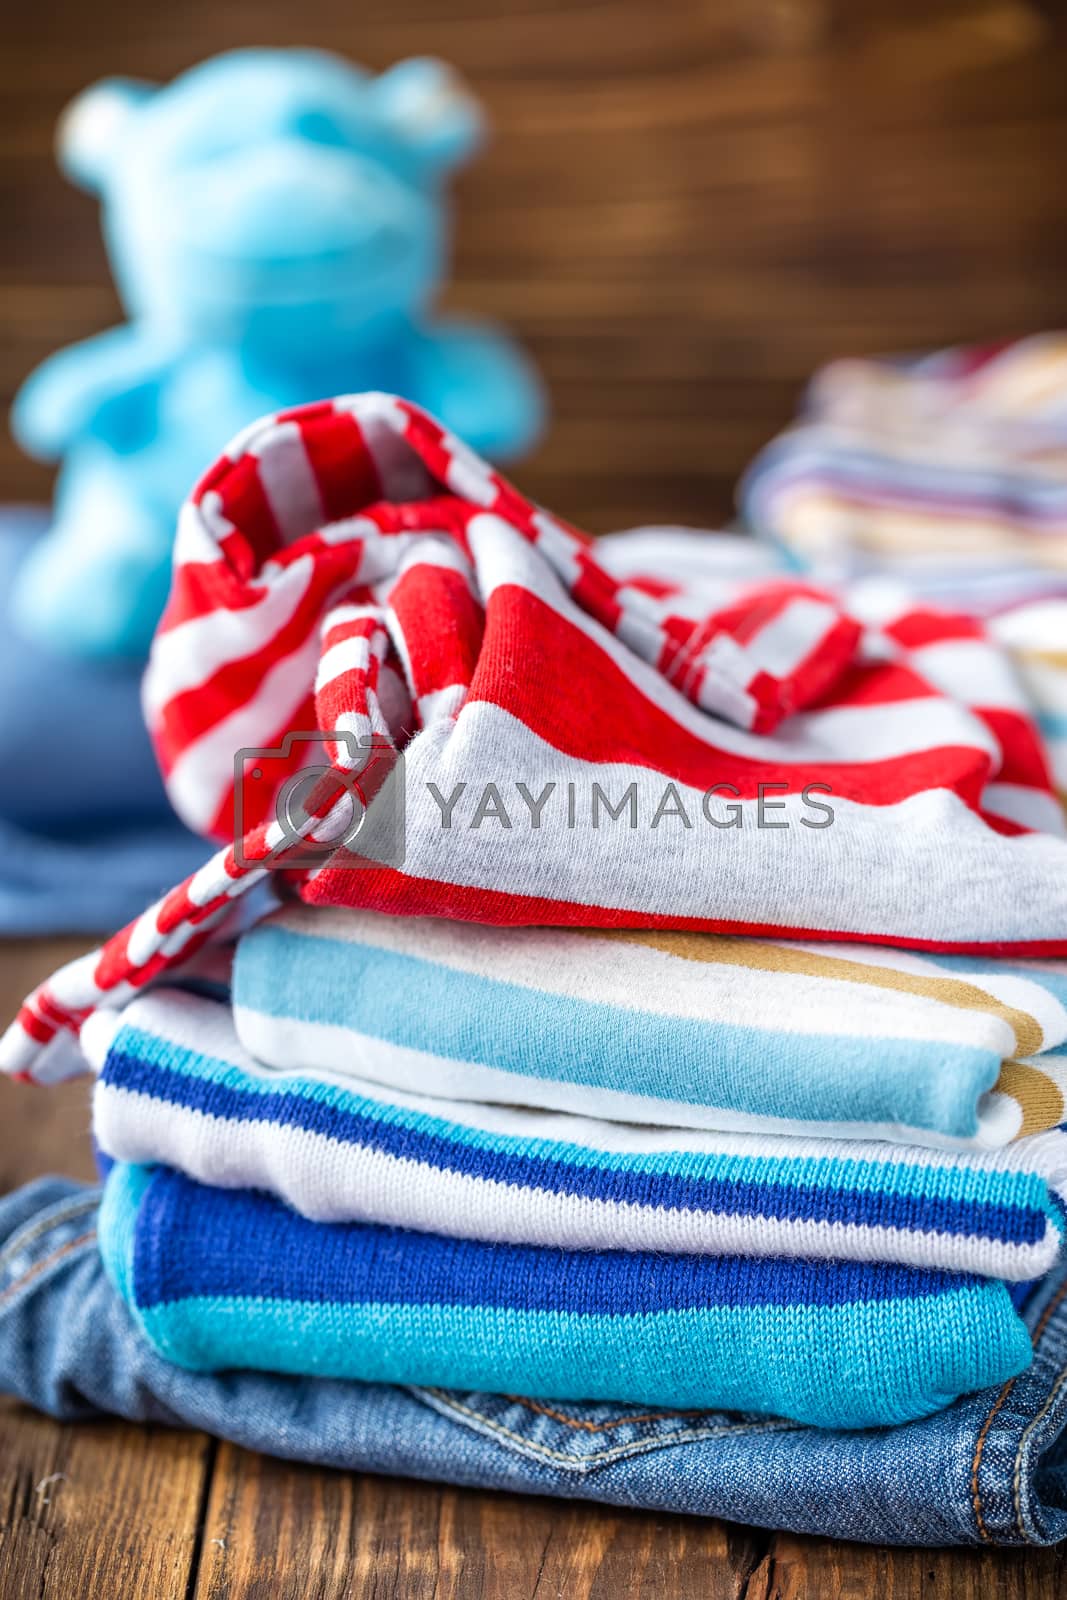 Royalty free image of Baby clothes by yelenayemchuk